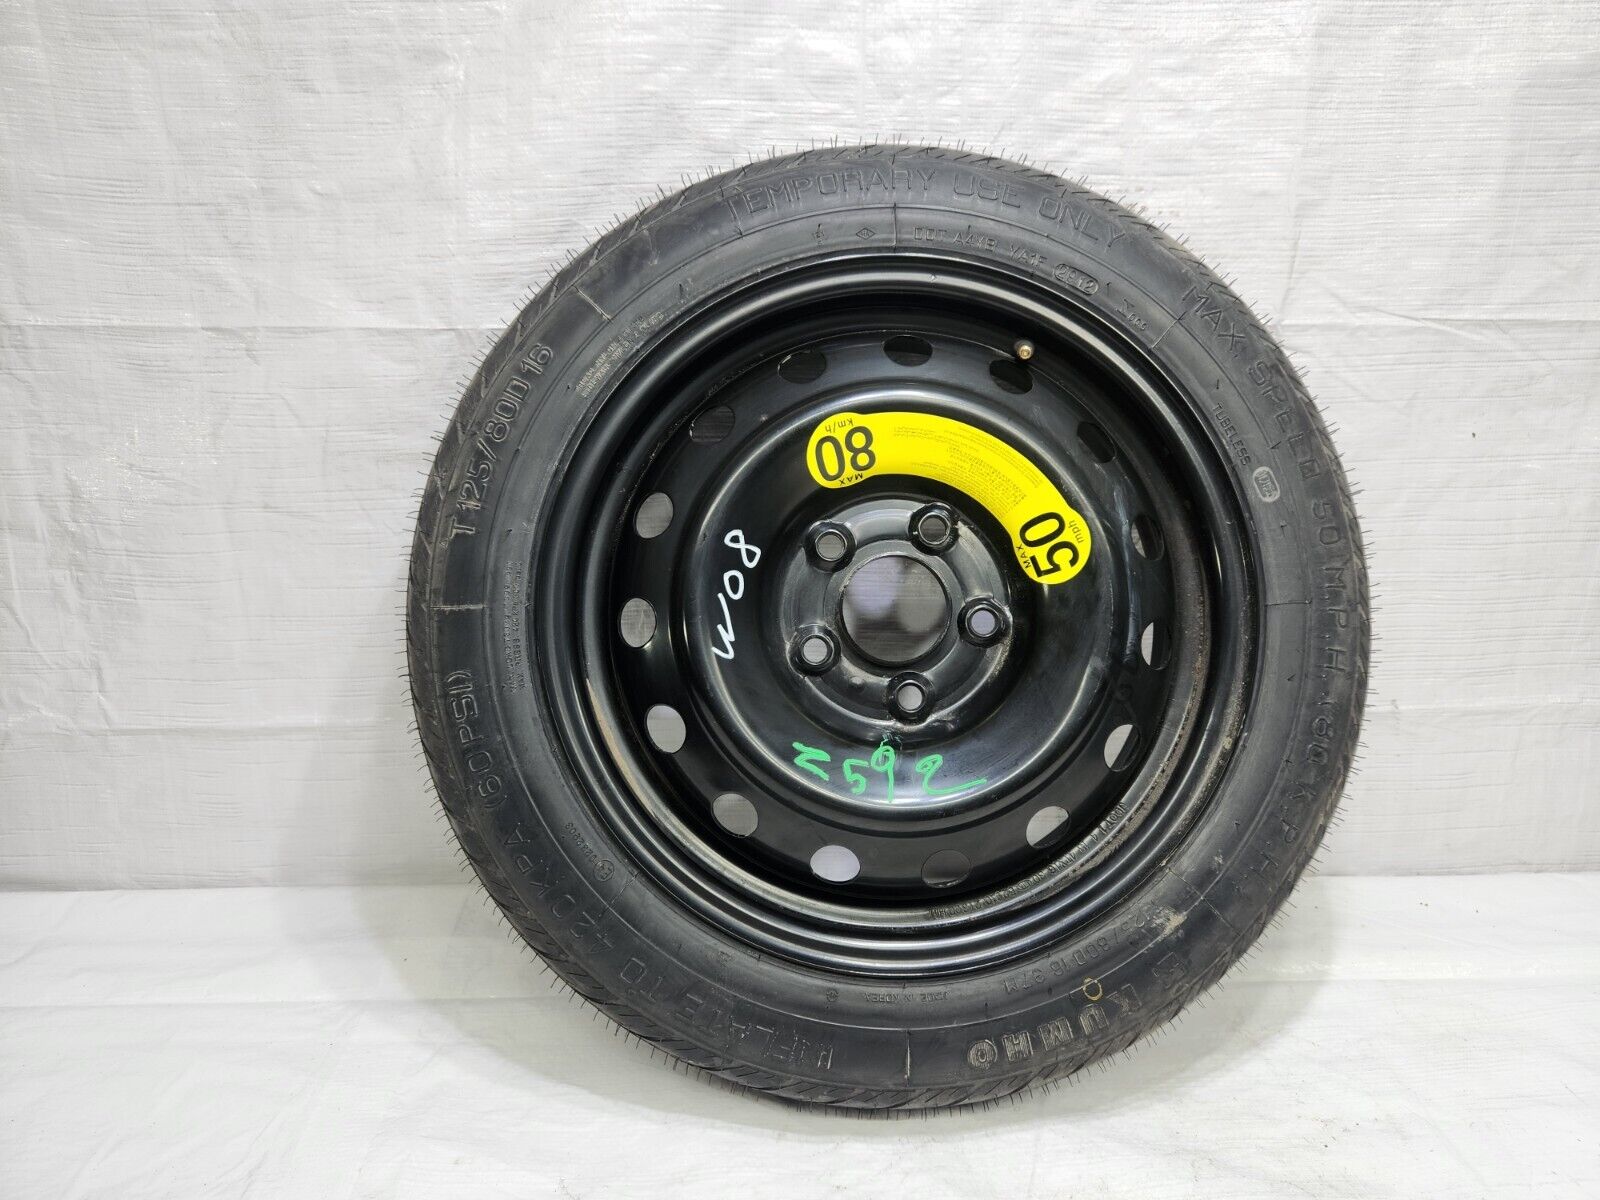 13 2013 Hyundai Veloster Emergency Spare Tire OEM T125/80D16